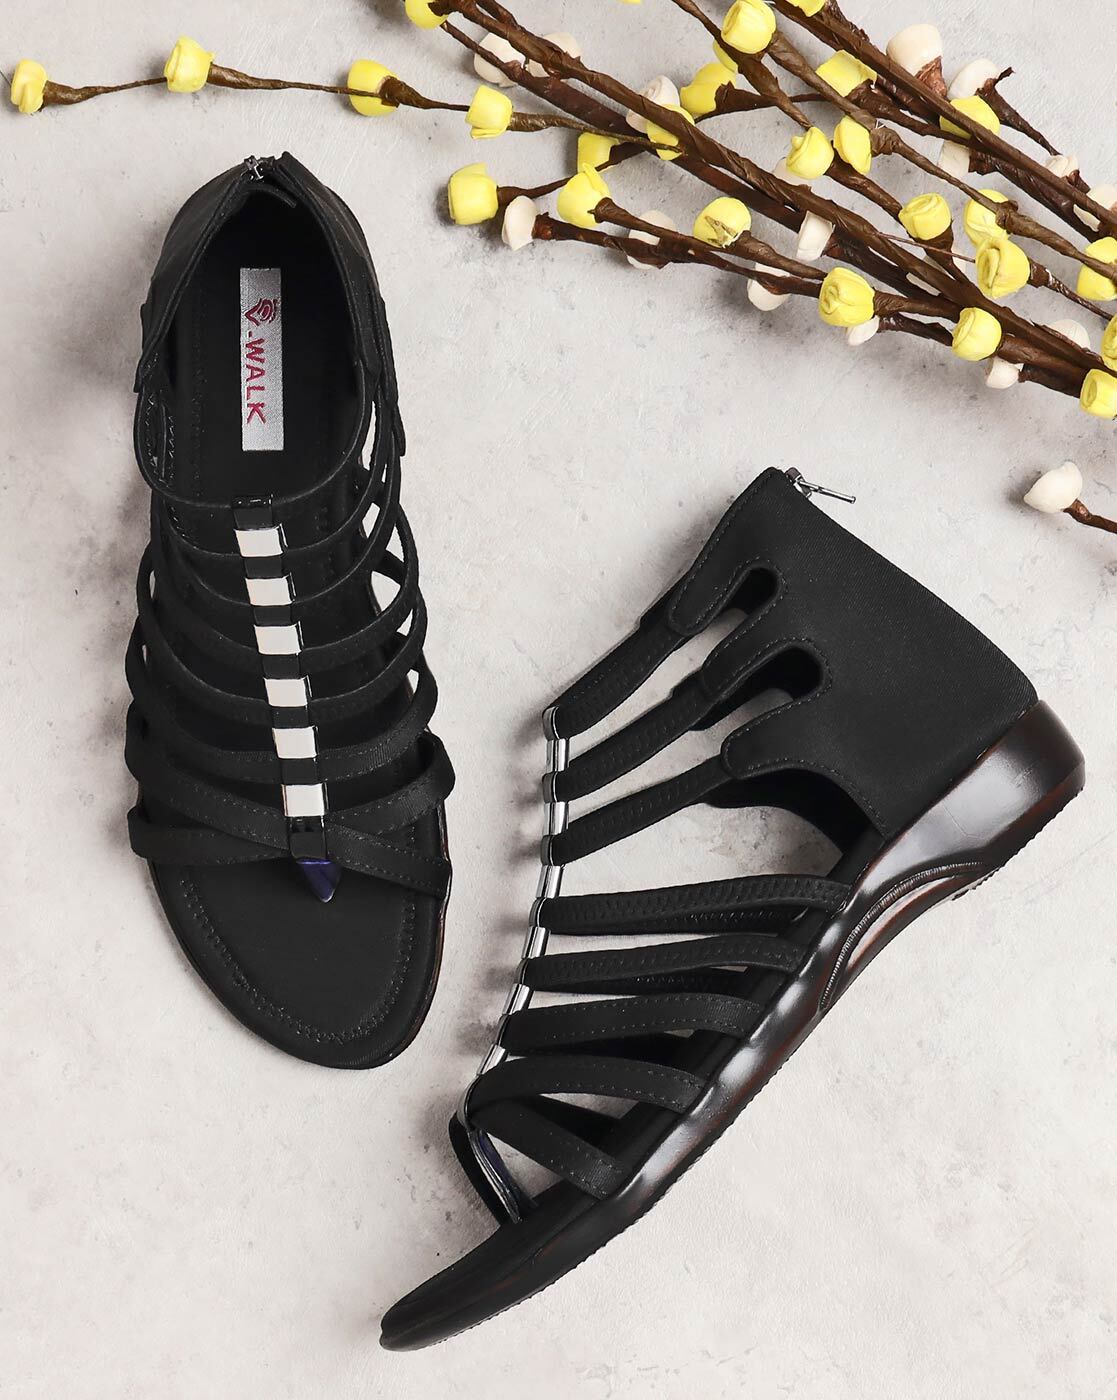 Reese Adjustable Gladiator Sandal - Black - Walking Sandal with Arch Support